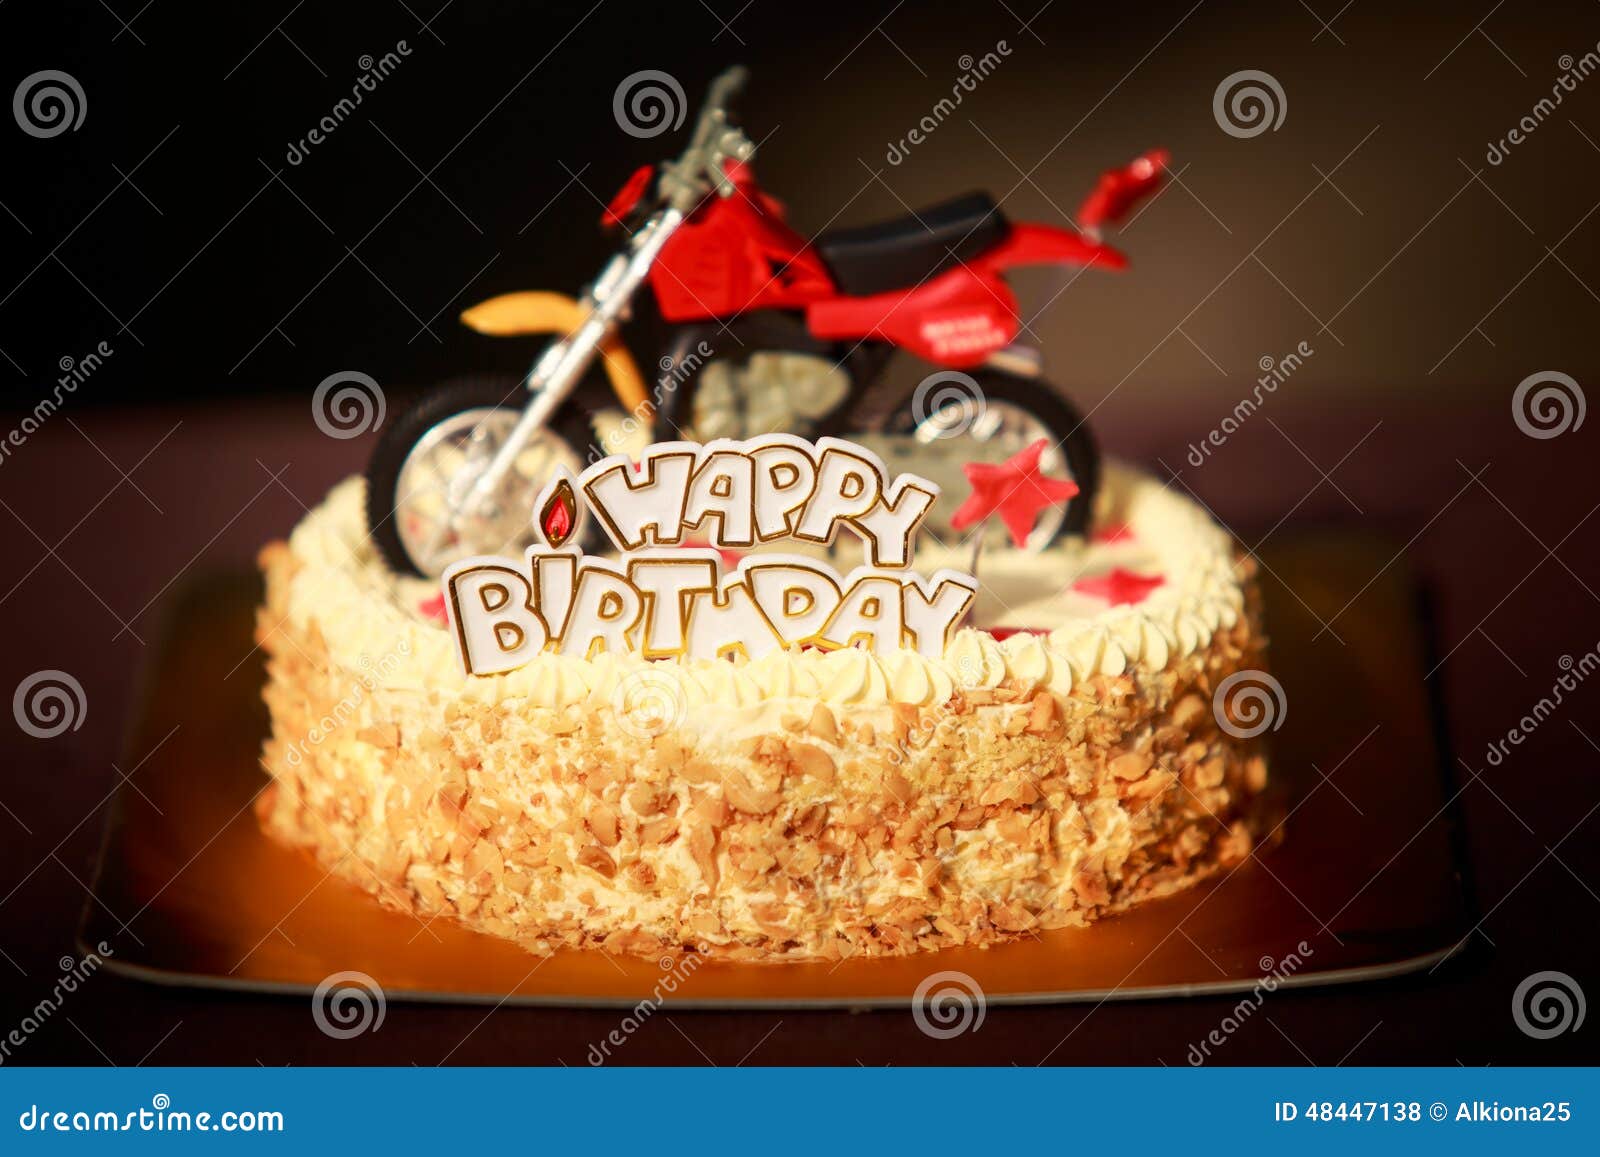 Share 166+ happy birthday motorcycle cake best - in.eteachers